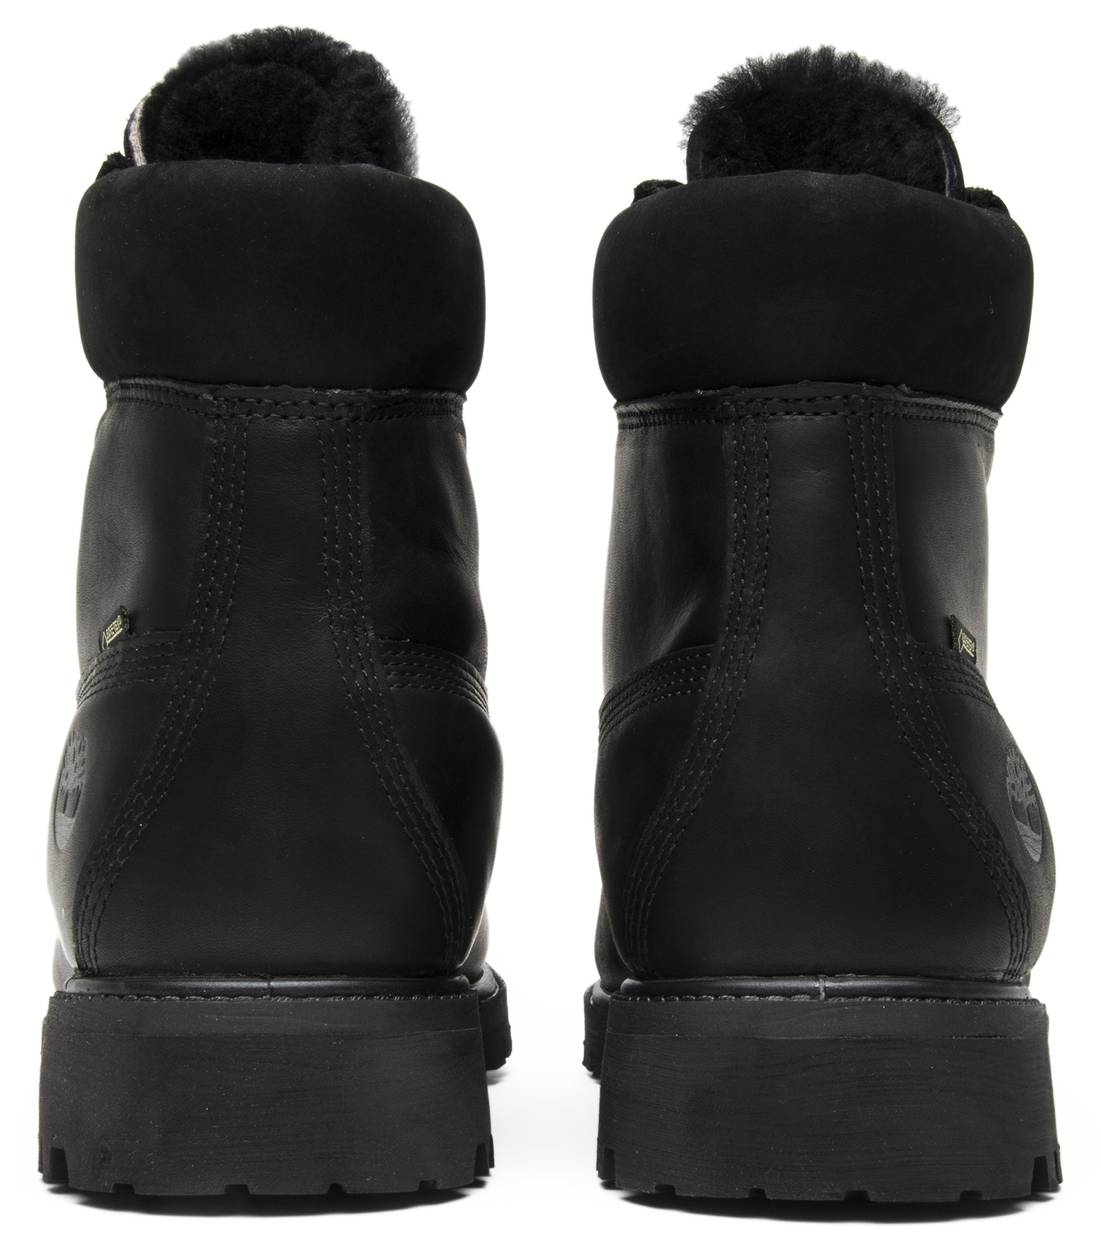 OVO x 6 Inch Premium Boot 'Black' - Timberland - TB0A1OVO | GOAT